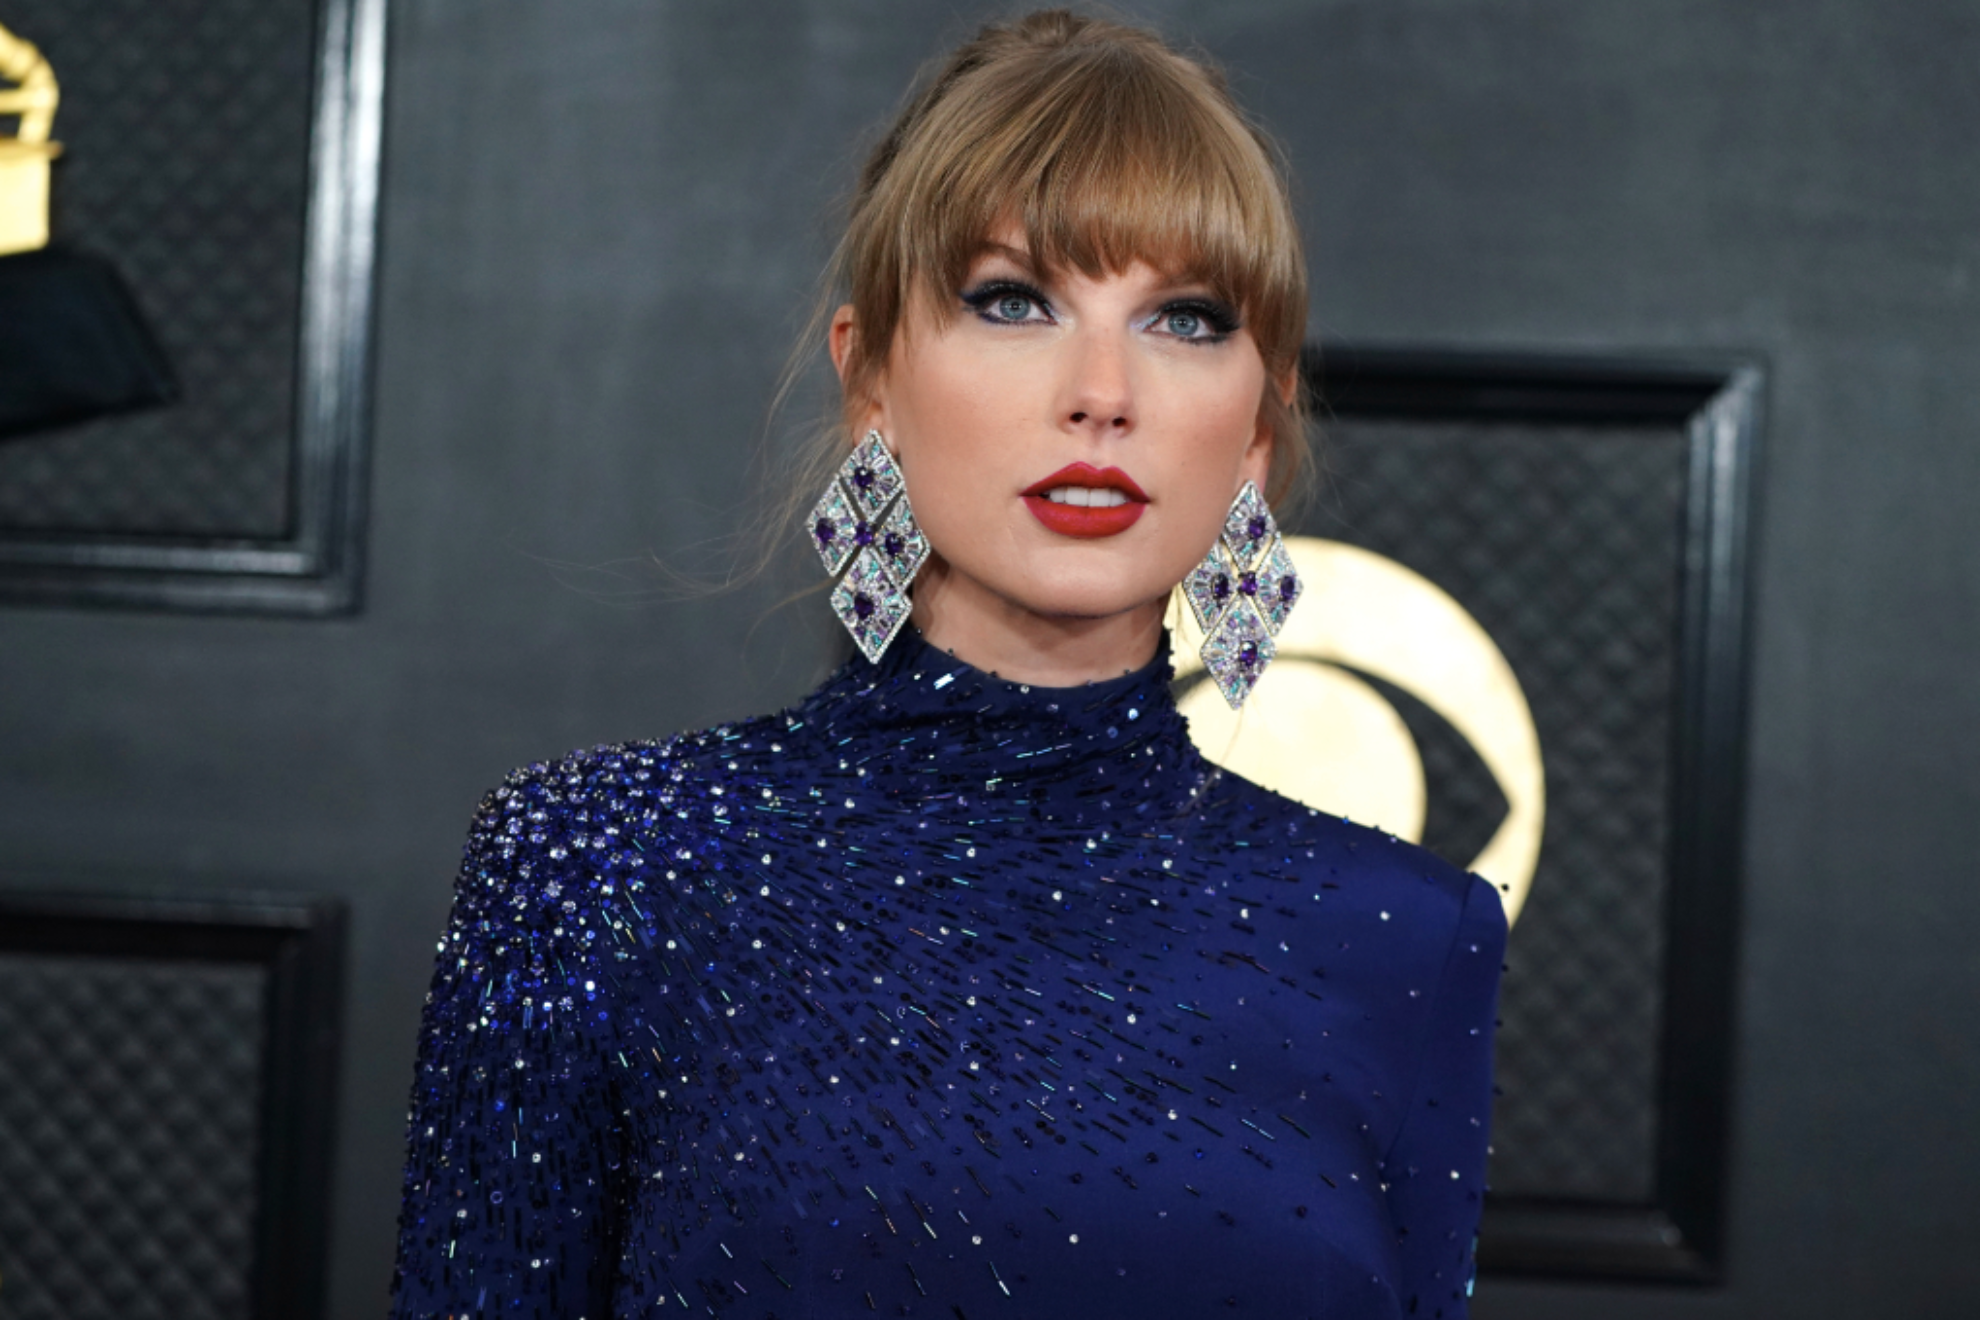 Taylor Swift devastated after fan's death during her concert in Brazil: I'm heartbroken